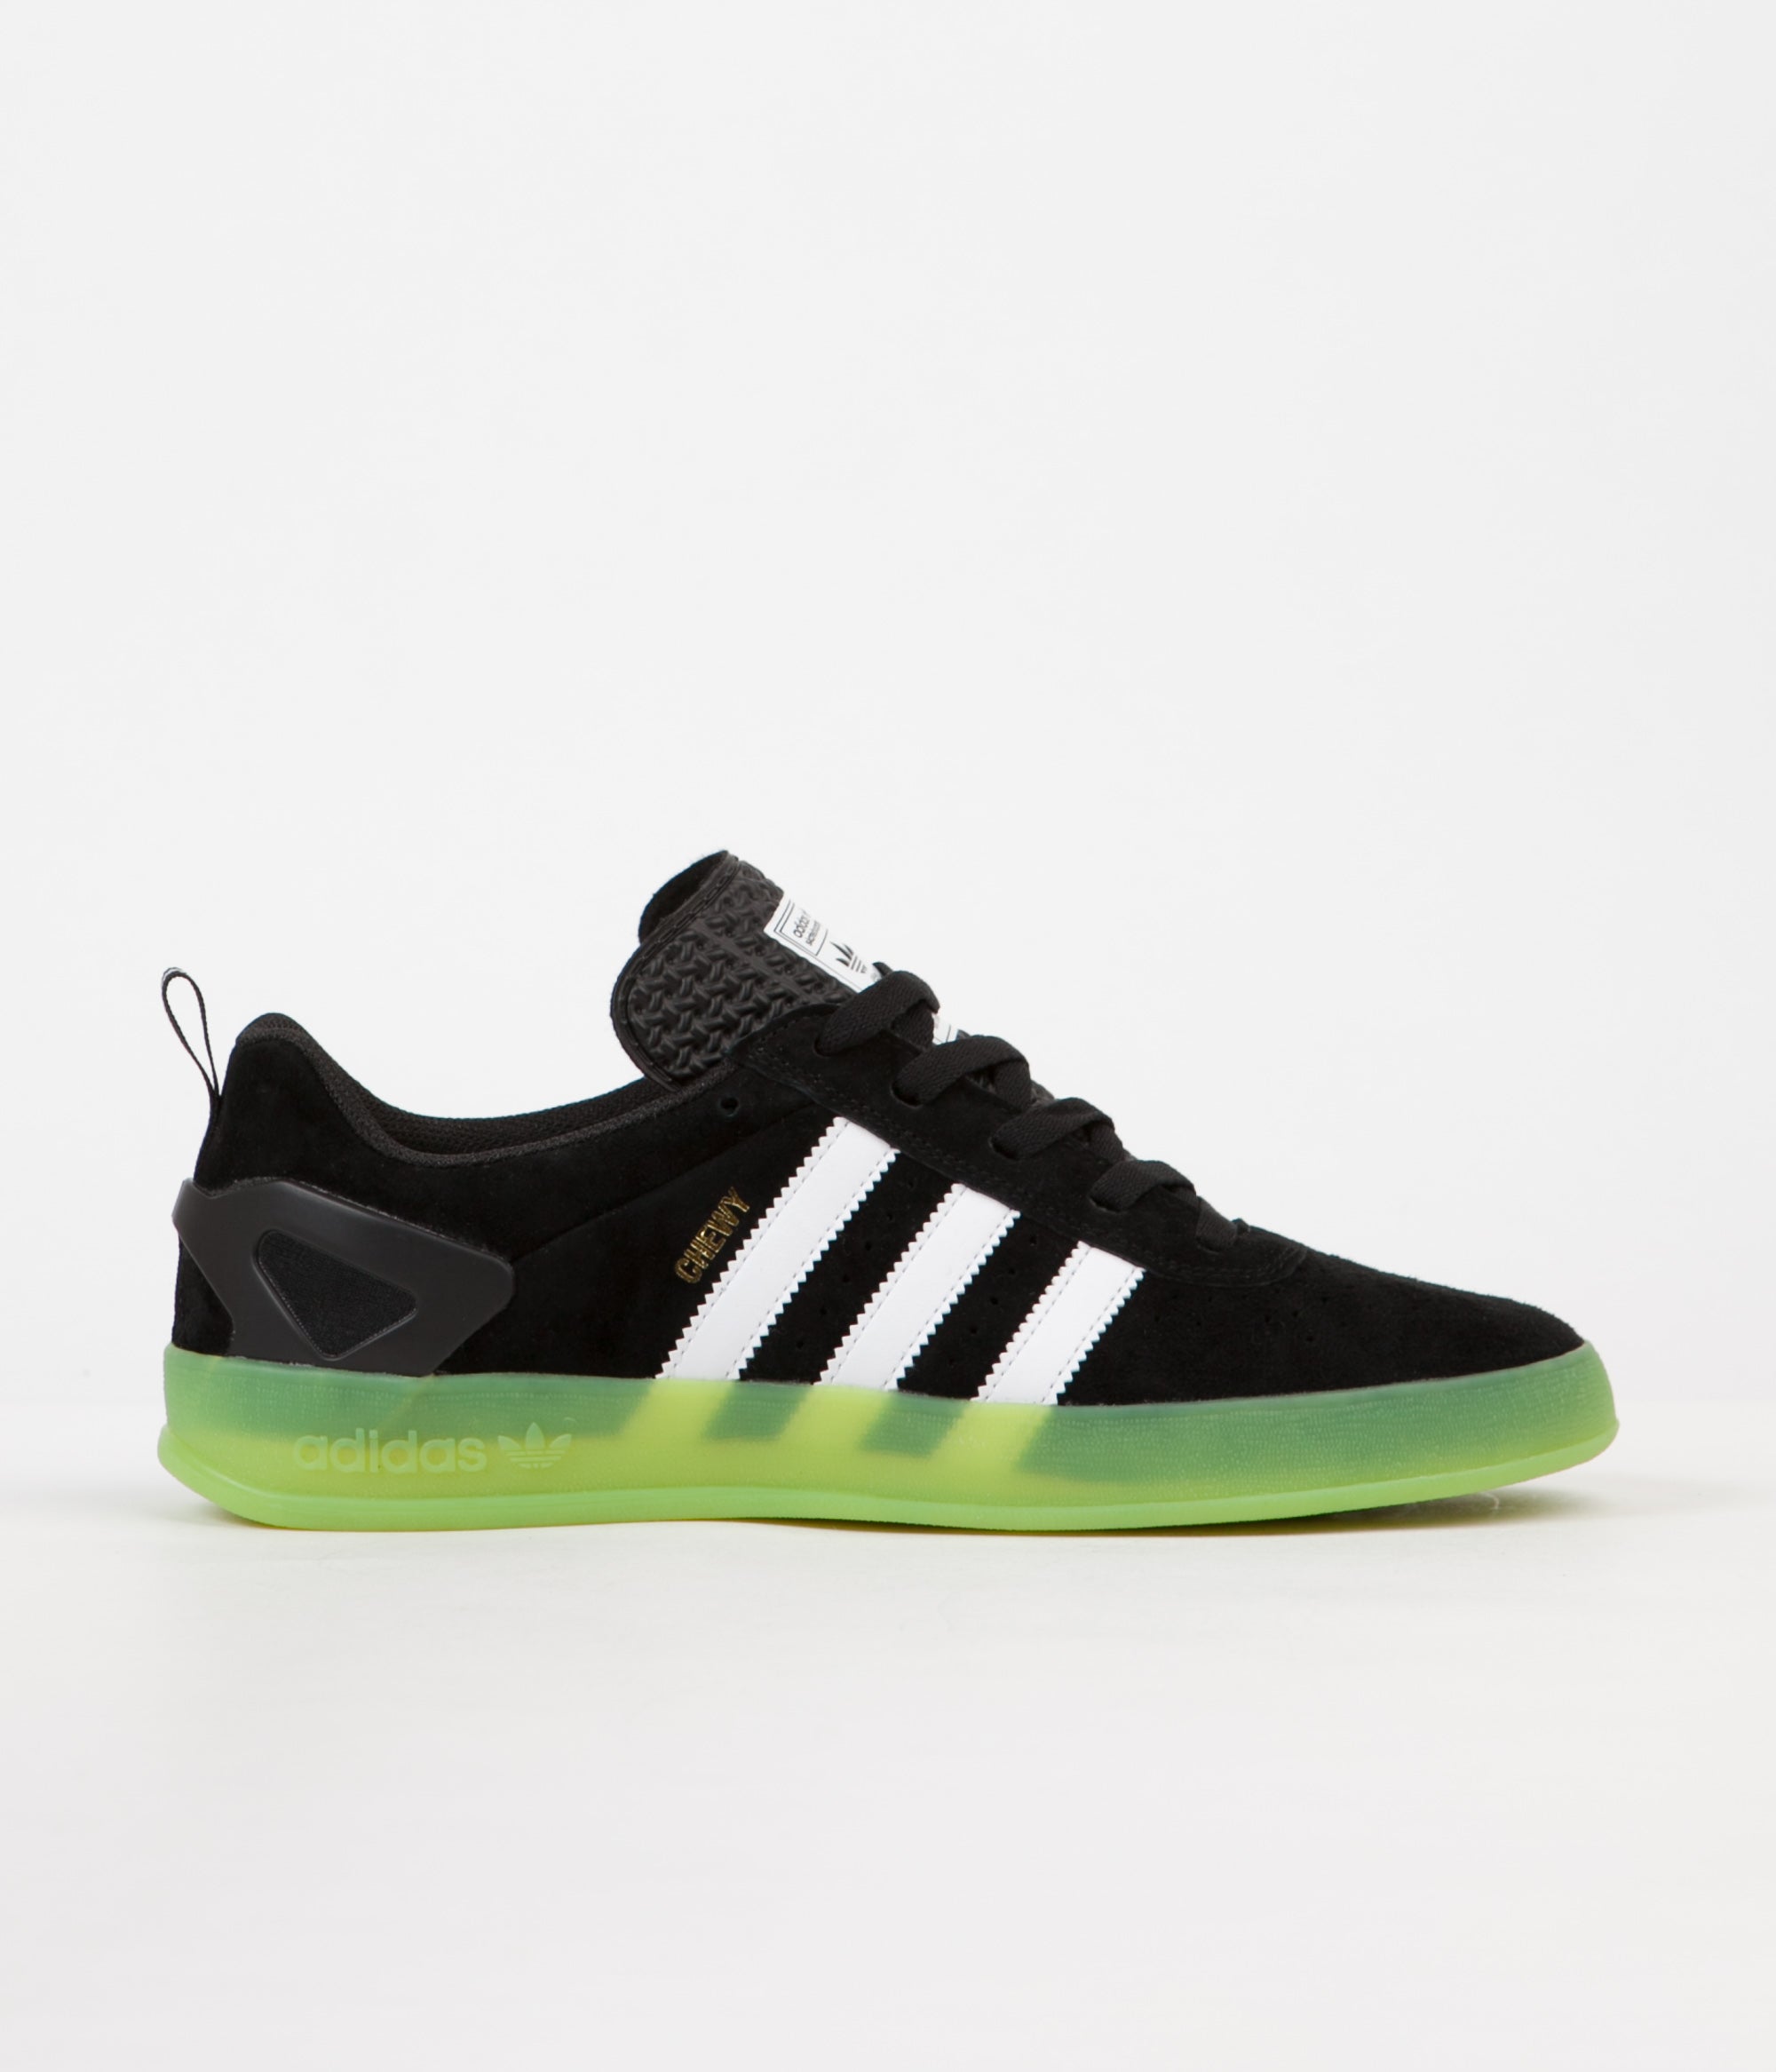 Adidas x Palace Pro 'Chewy' Shoes - Black / White / Green | Flatspot